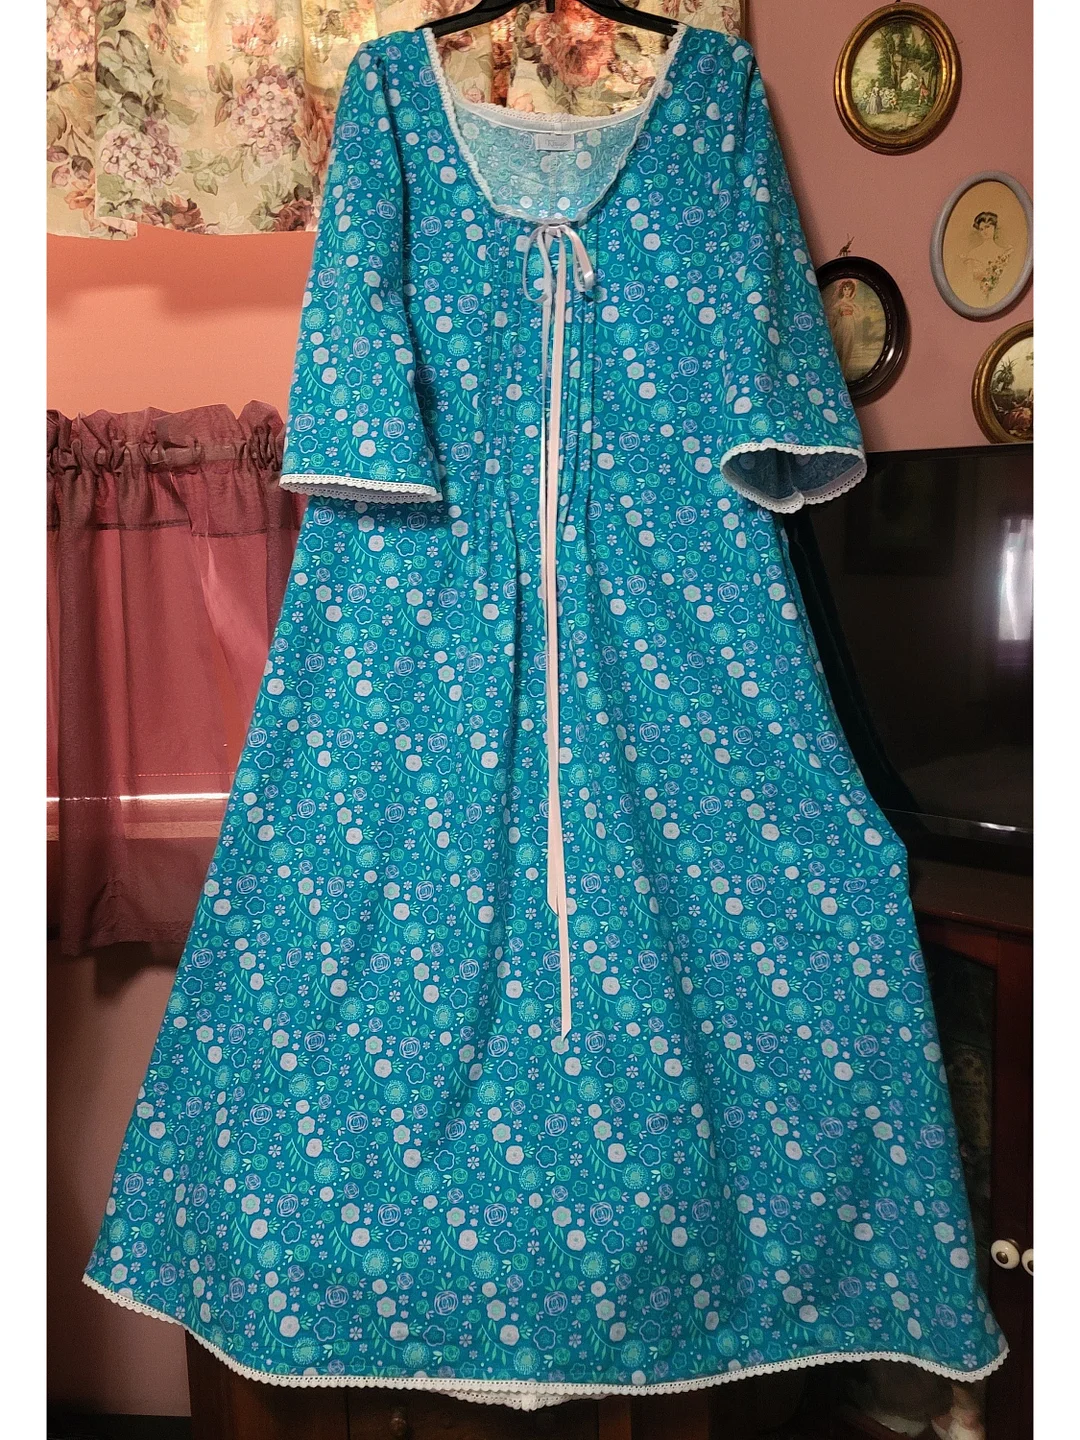 Flannel Nightgown - Handmade Victorian/Vintage Style Floor Length